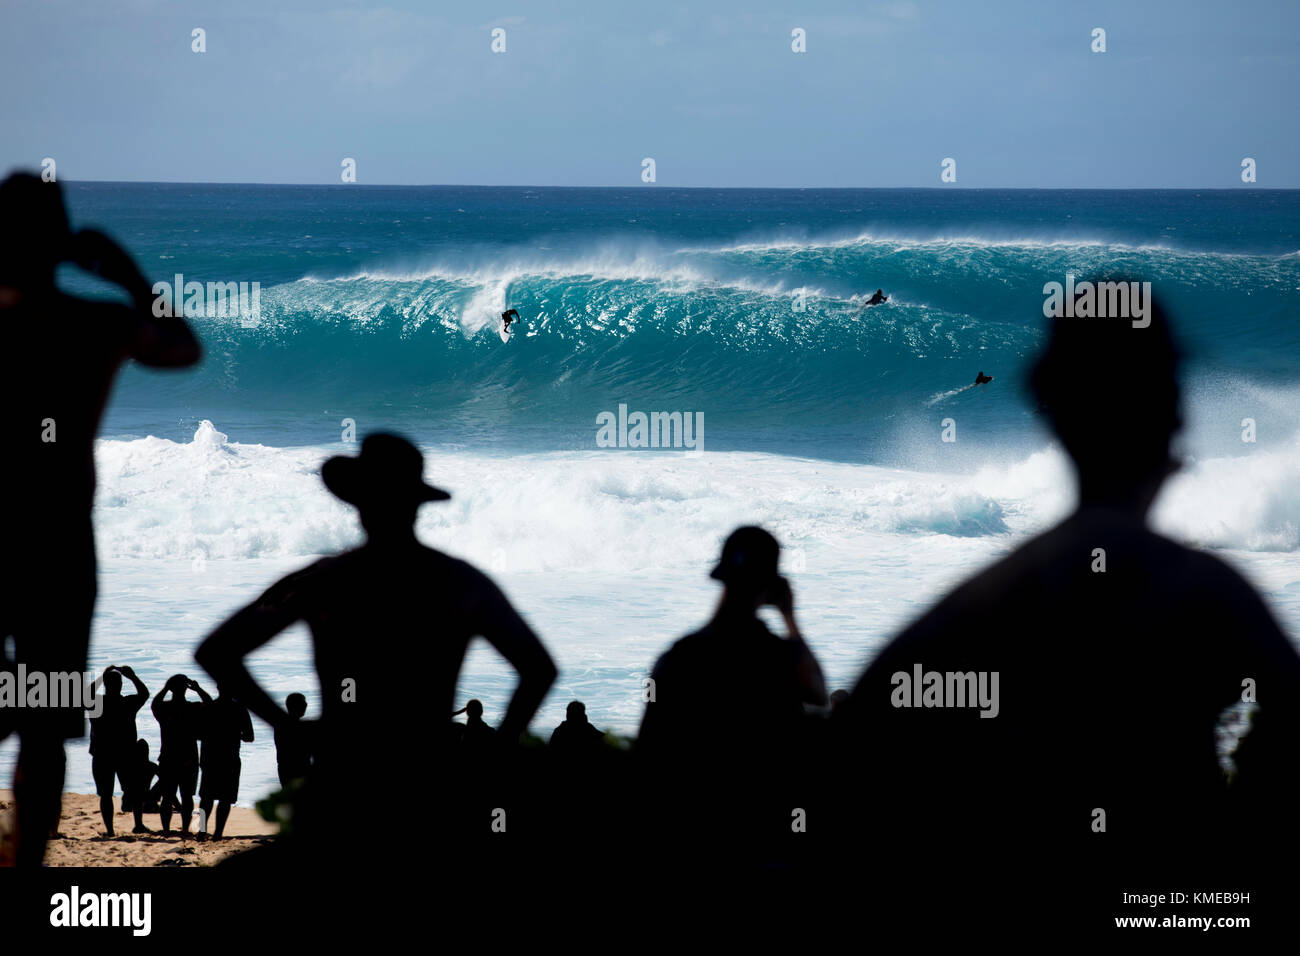 Silhouetten Zuschauer beobachten Surfer reiten riesige Wellen auf weltberühmten Banzai Pipeline, an der Nordküste von Oahu, Hawaii, USA Stockfoto